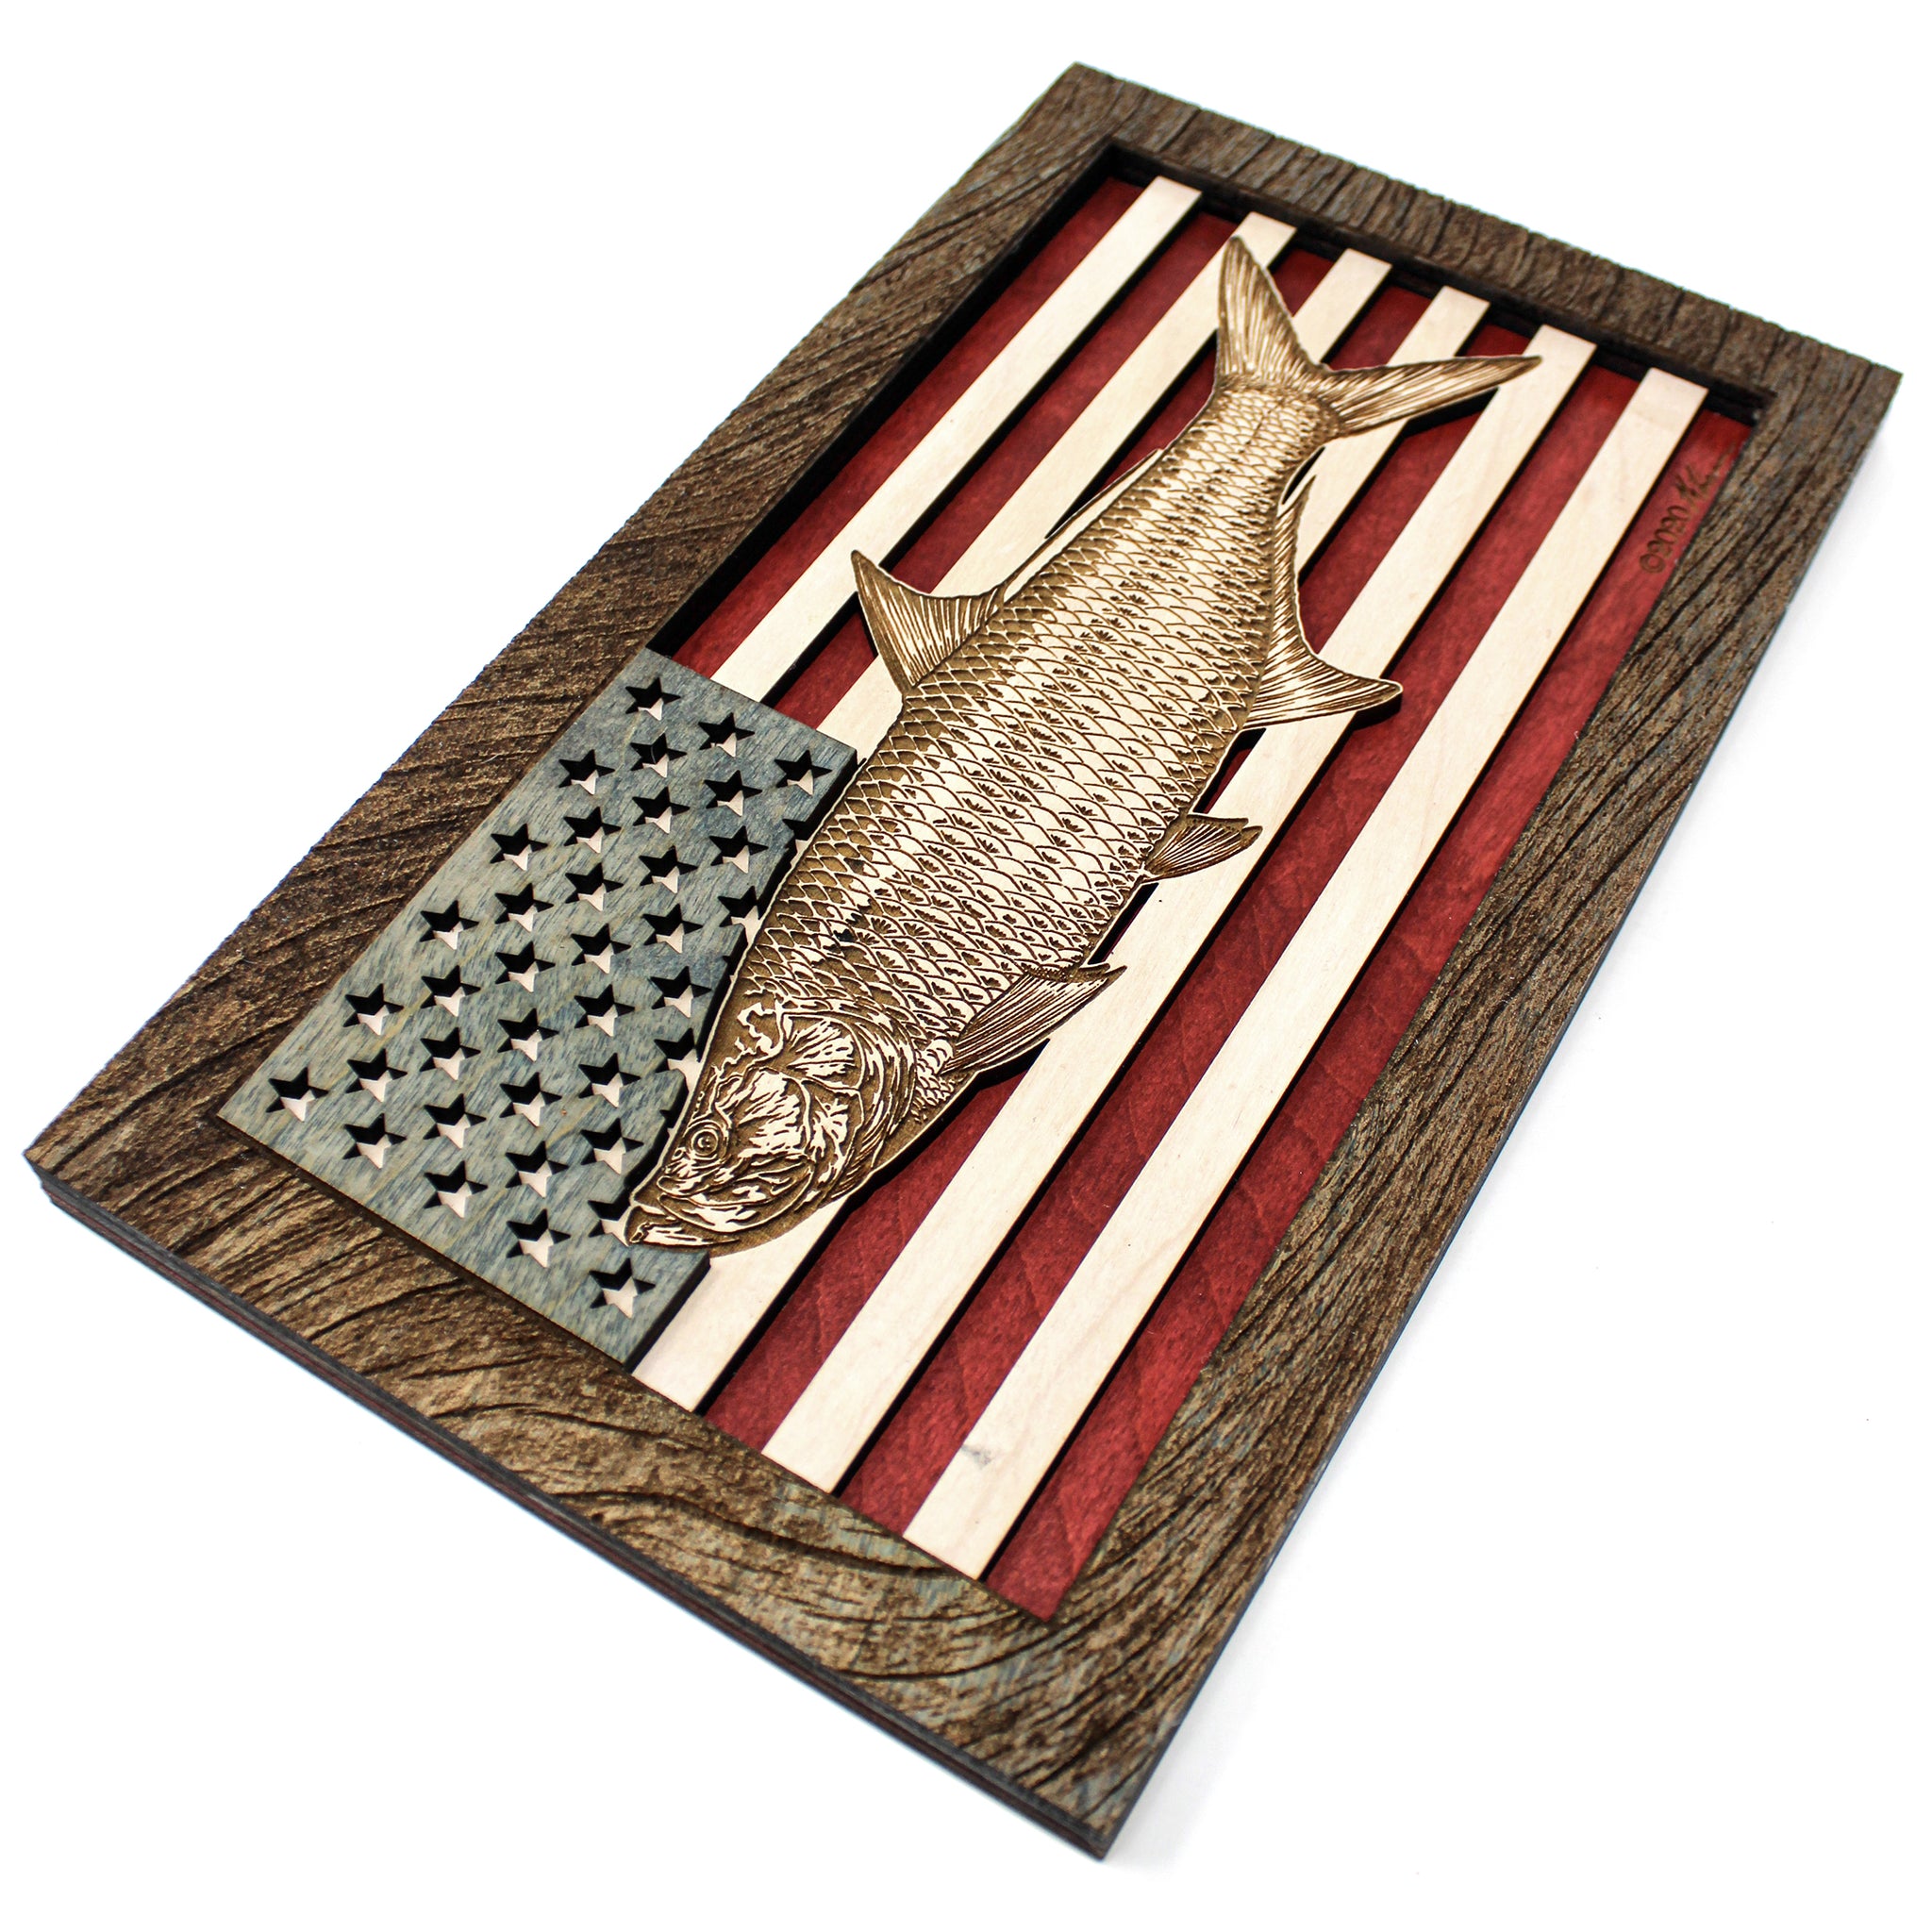 Wall Art - Tarpon American Flag 3D Wood Art